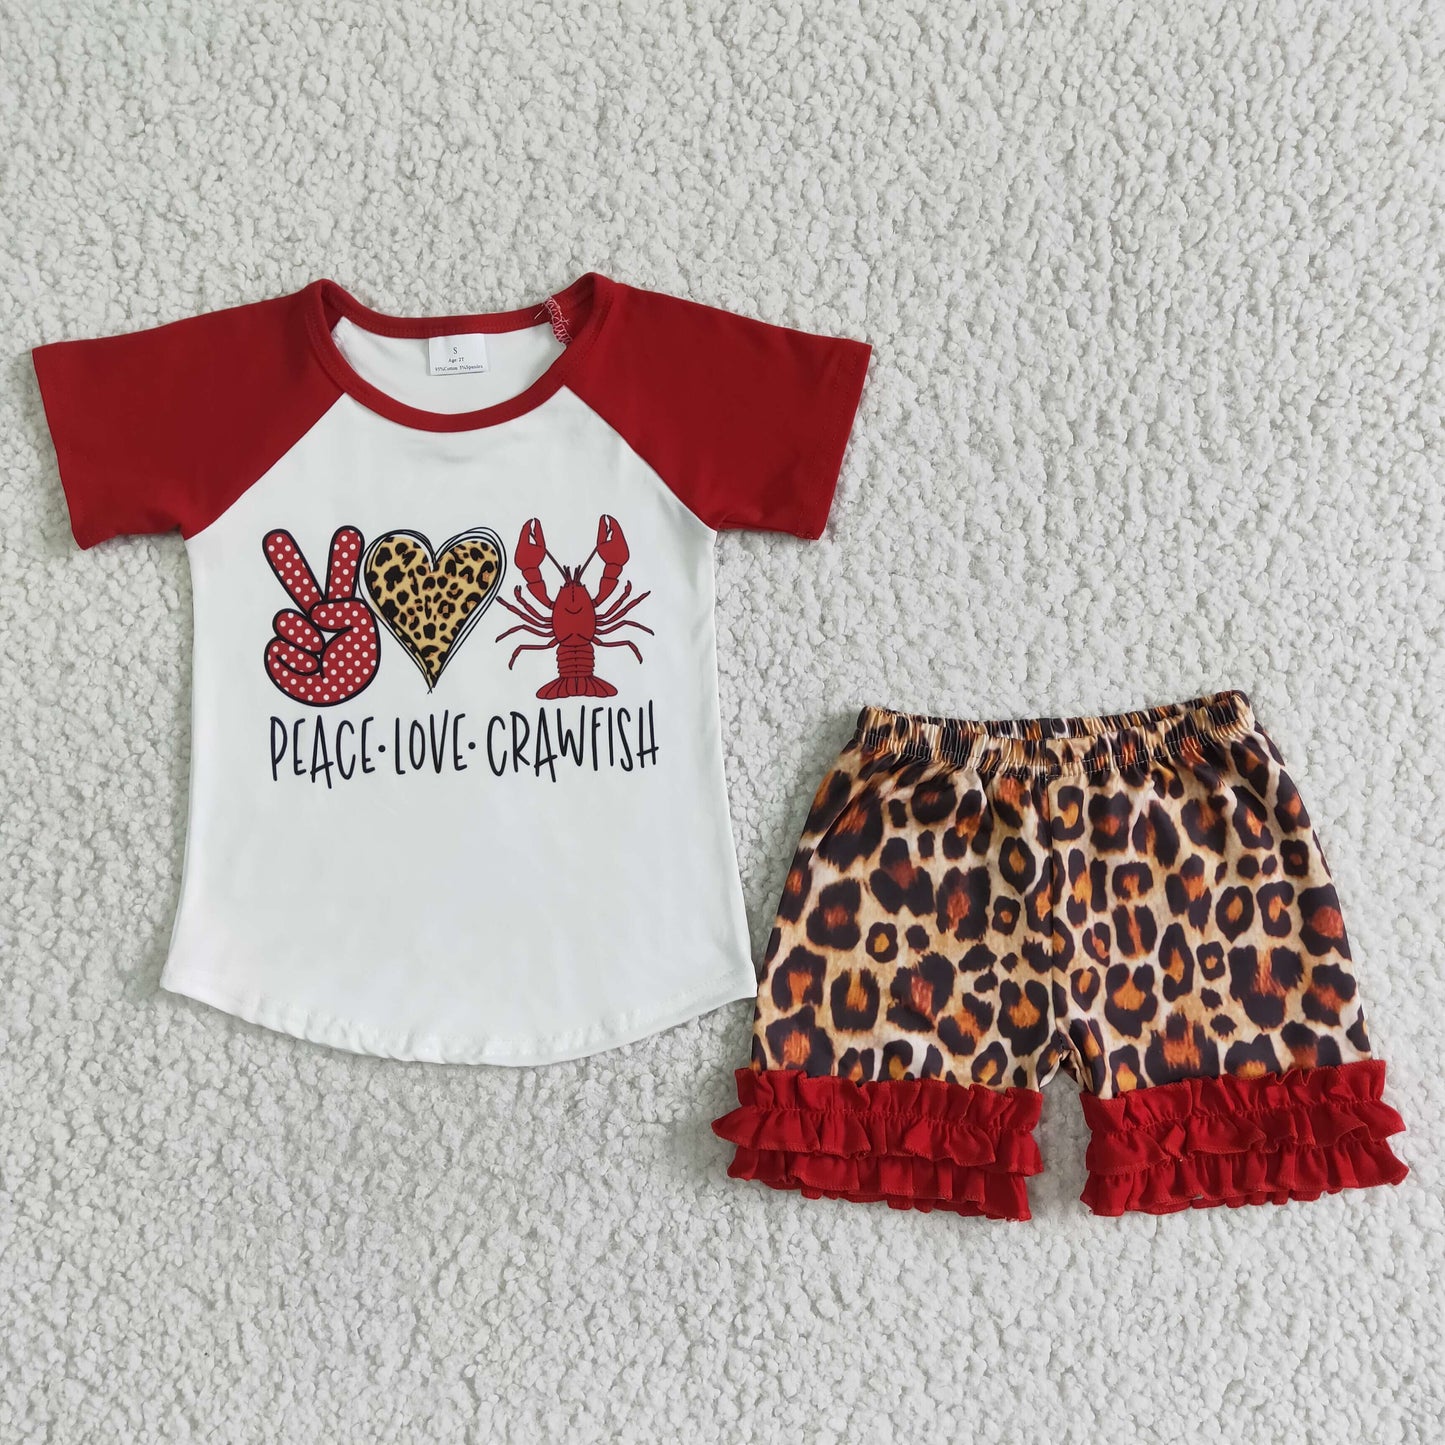 Peace love crawfish shirt leopard shorts girls summer clothes